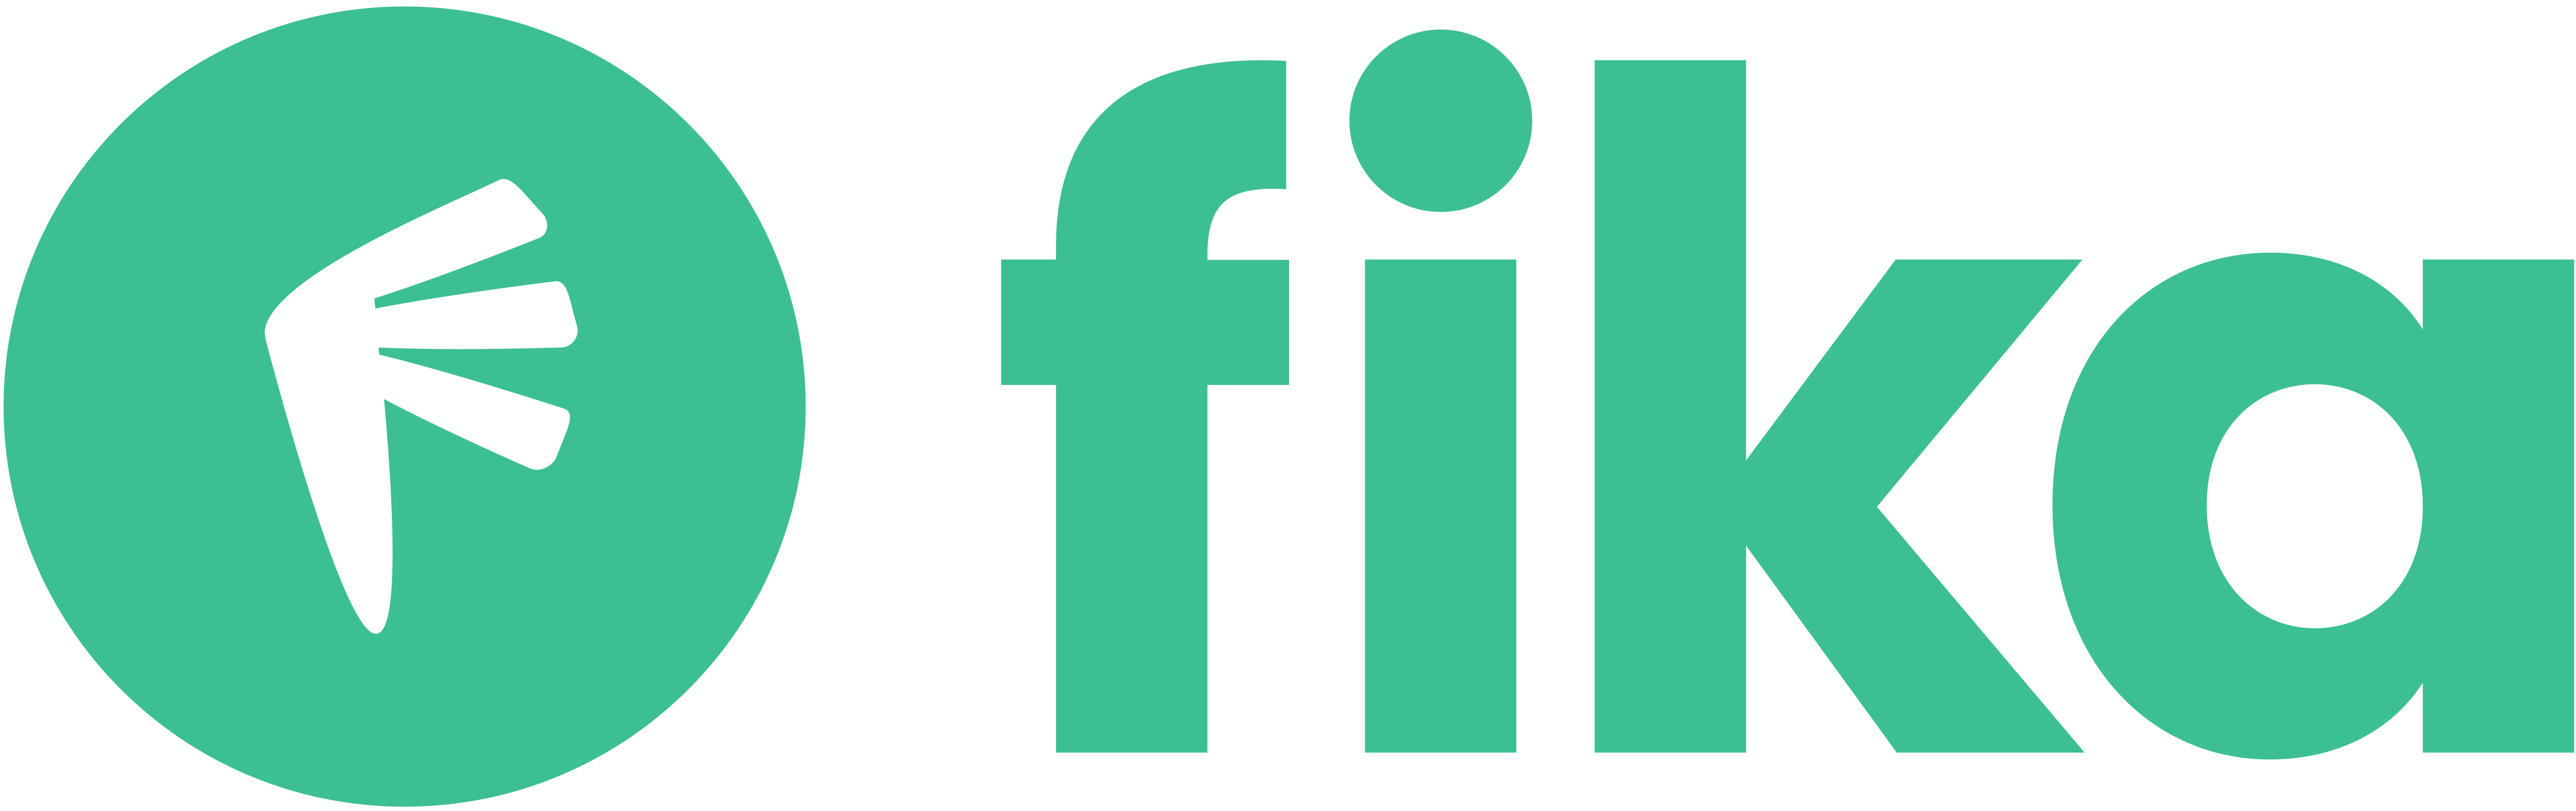 Fika-logo-Colour (3)